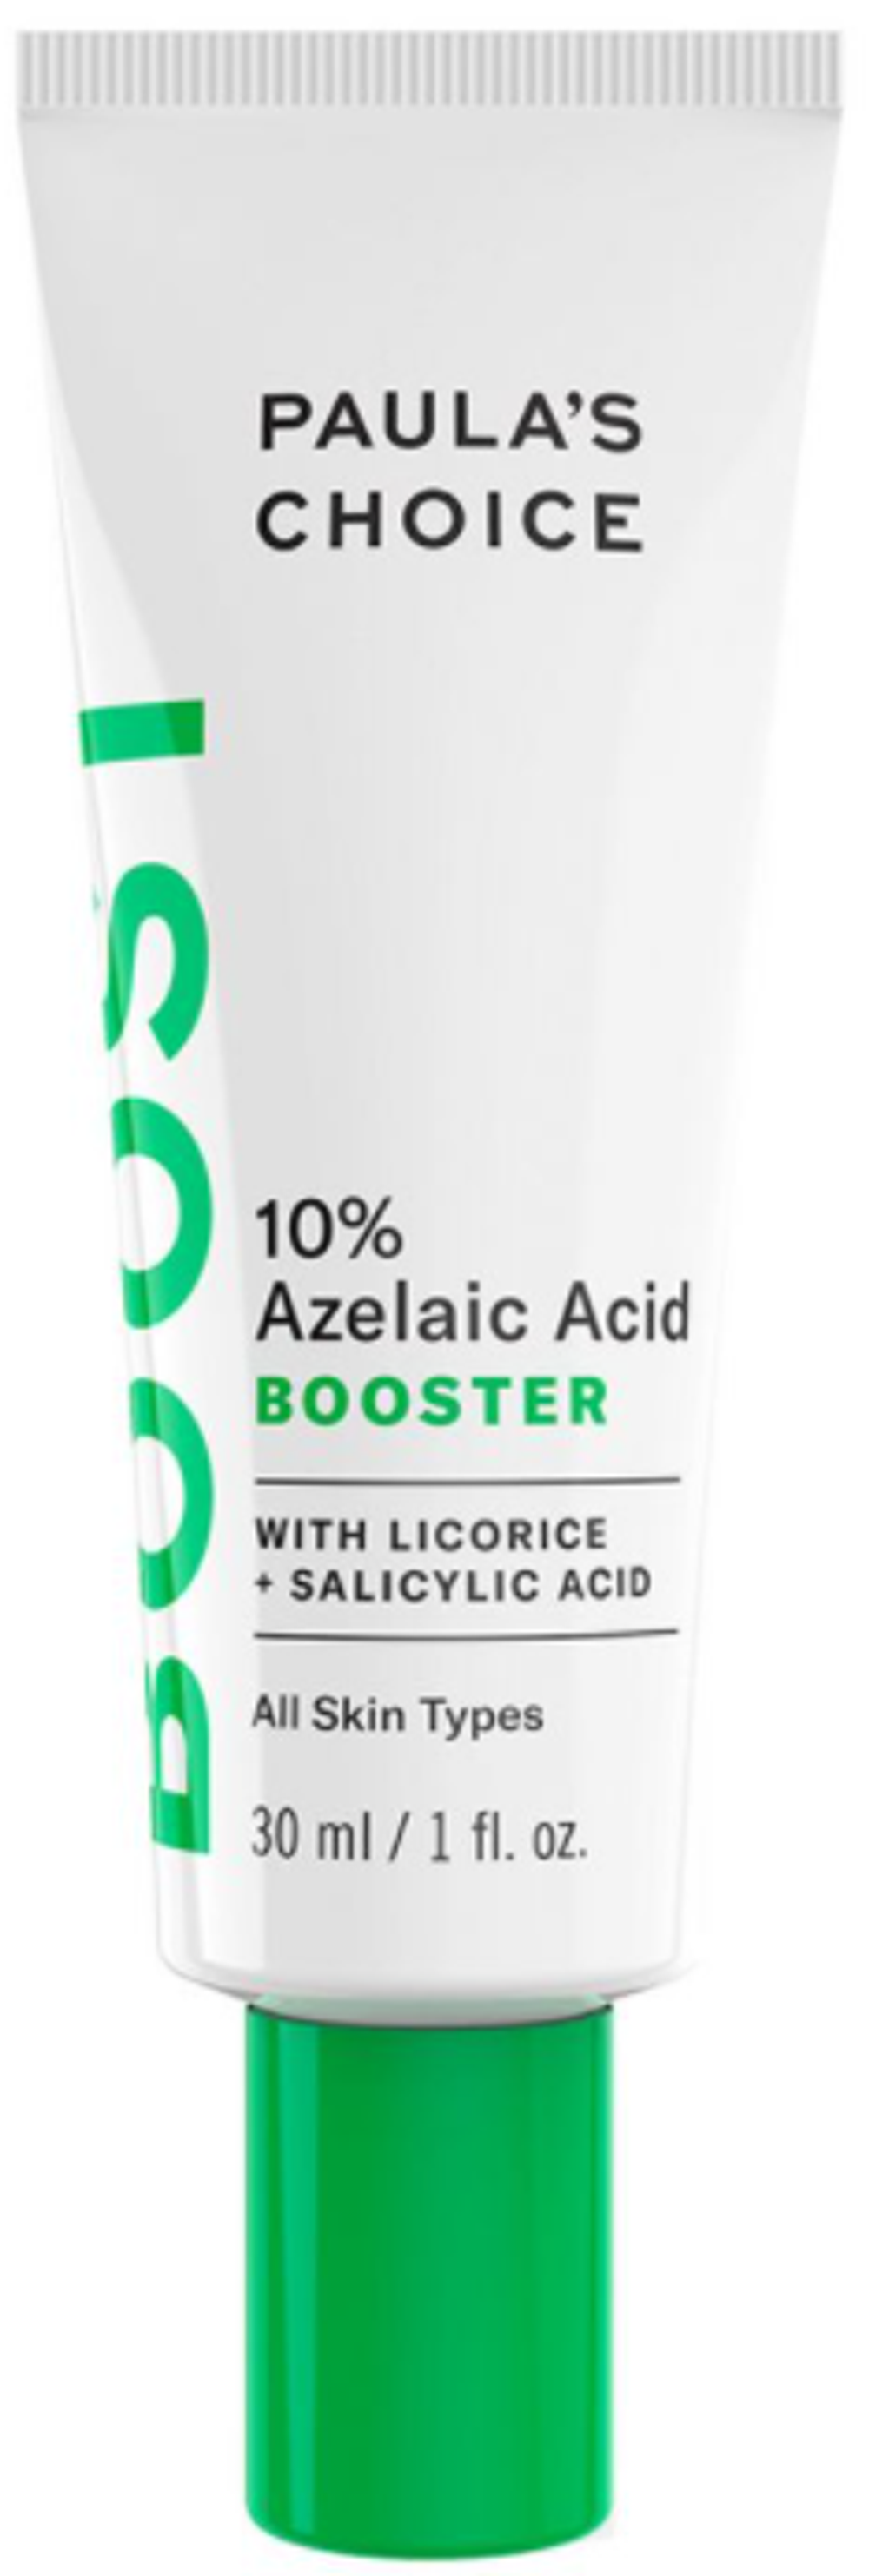 Paula's Choice 10% Azelaic Acid Booster бустер с азелаиновой кислотой 30мл